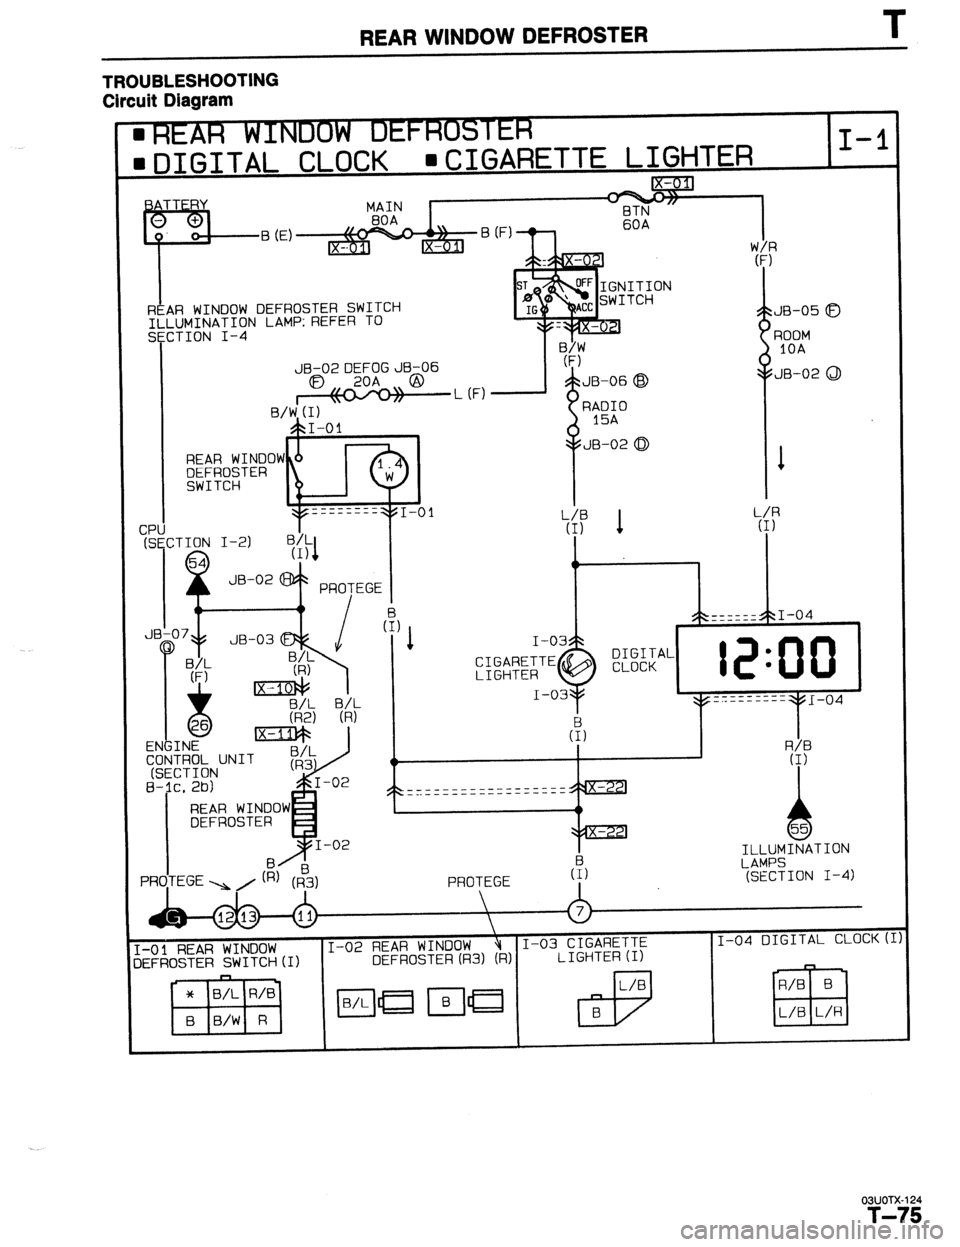 MAZDA PROTEGE 1992  Workshop Manual REAR WINDOW DEFROSTER T 
TROUBLESHOOTING 
Circuit Diagram 
. .- 
m DIGITAL CLOCK WXGARETTE LIGHTER I-l 
f$pjg 
MAIN 
BOA BTN 
60A v v 
0. o! B (E) 
l- IX-0 lJ 
Ix-u REAR WINDOW DEFROSTER SWITCH TI LUM